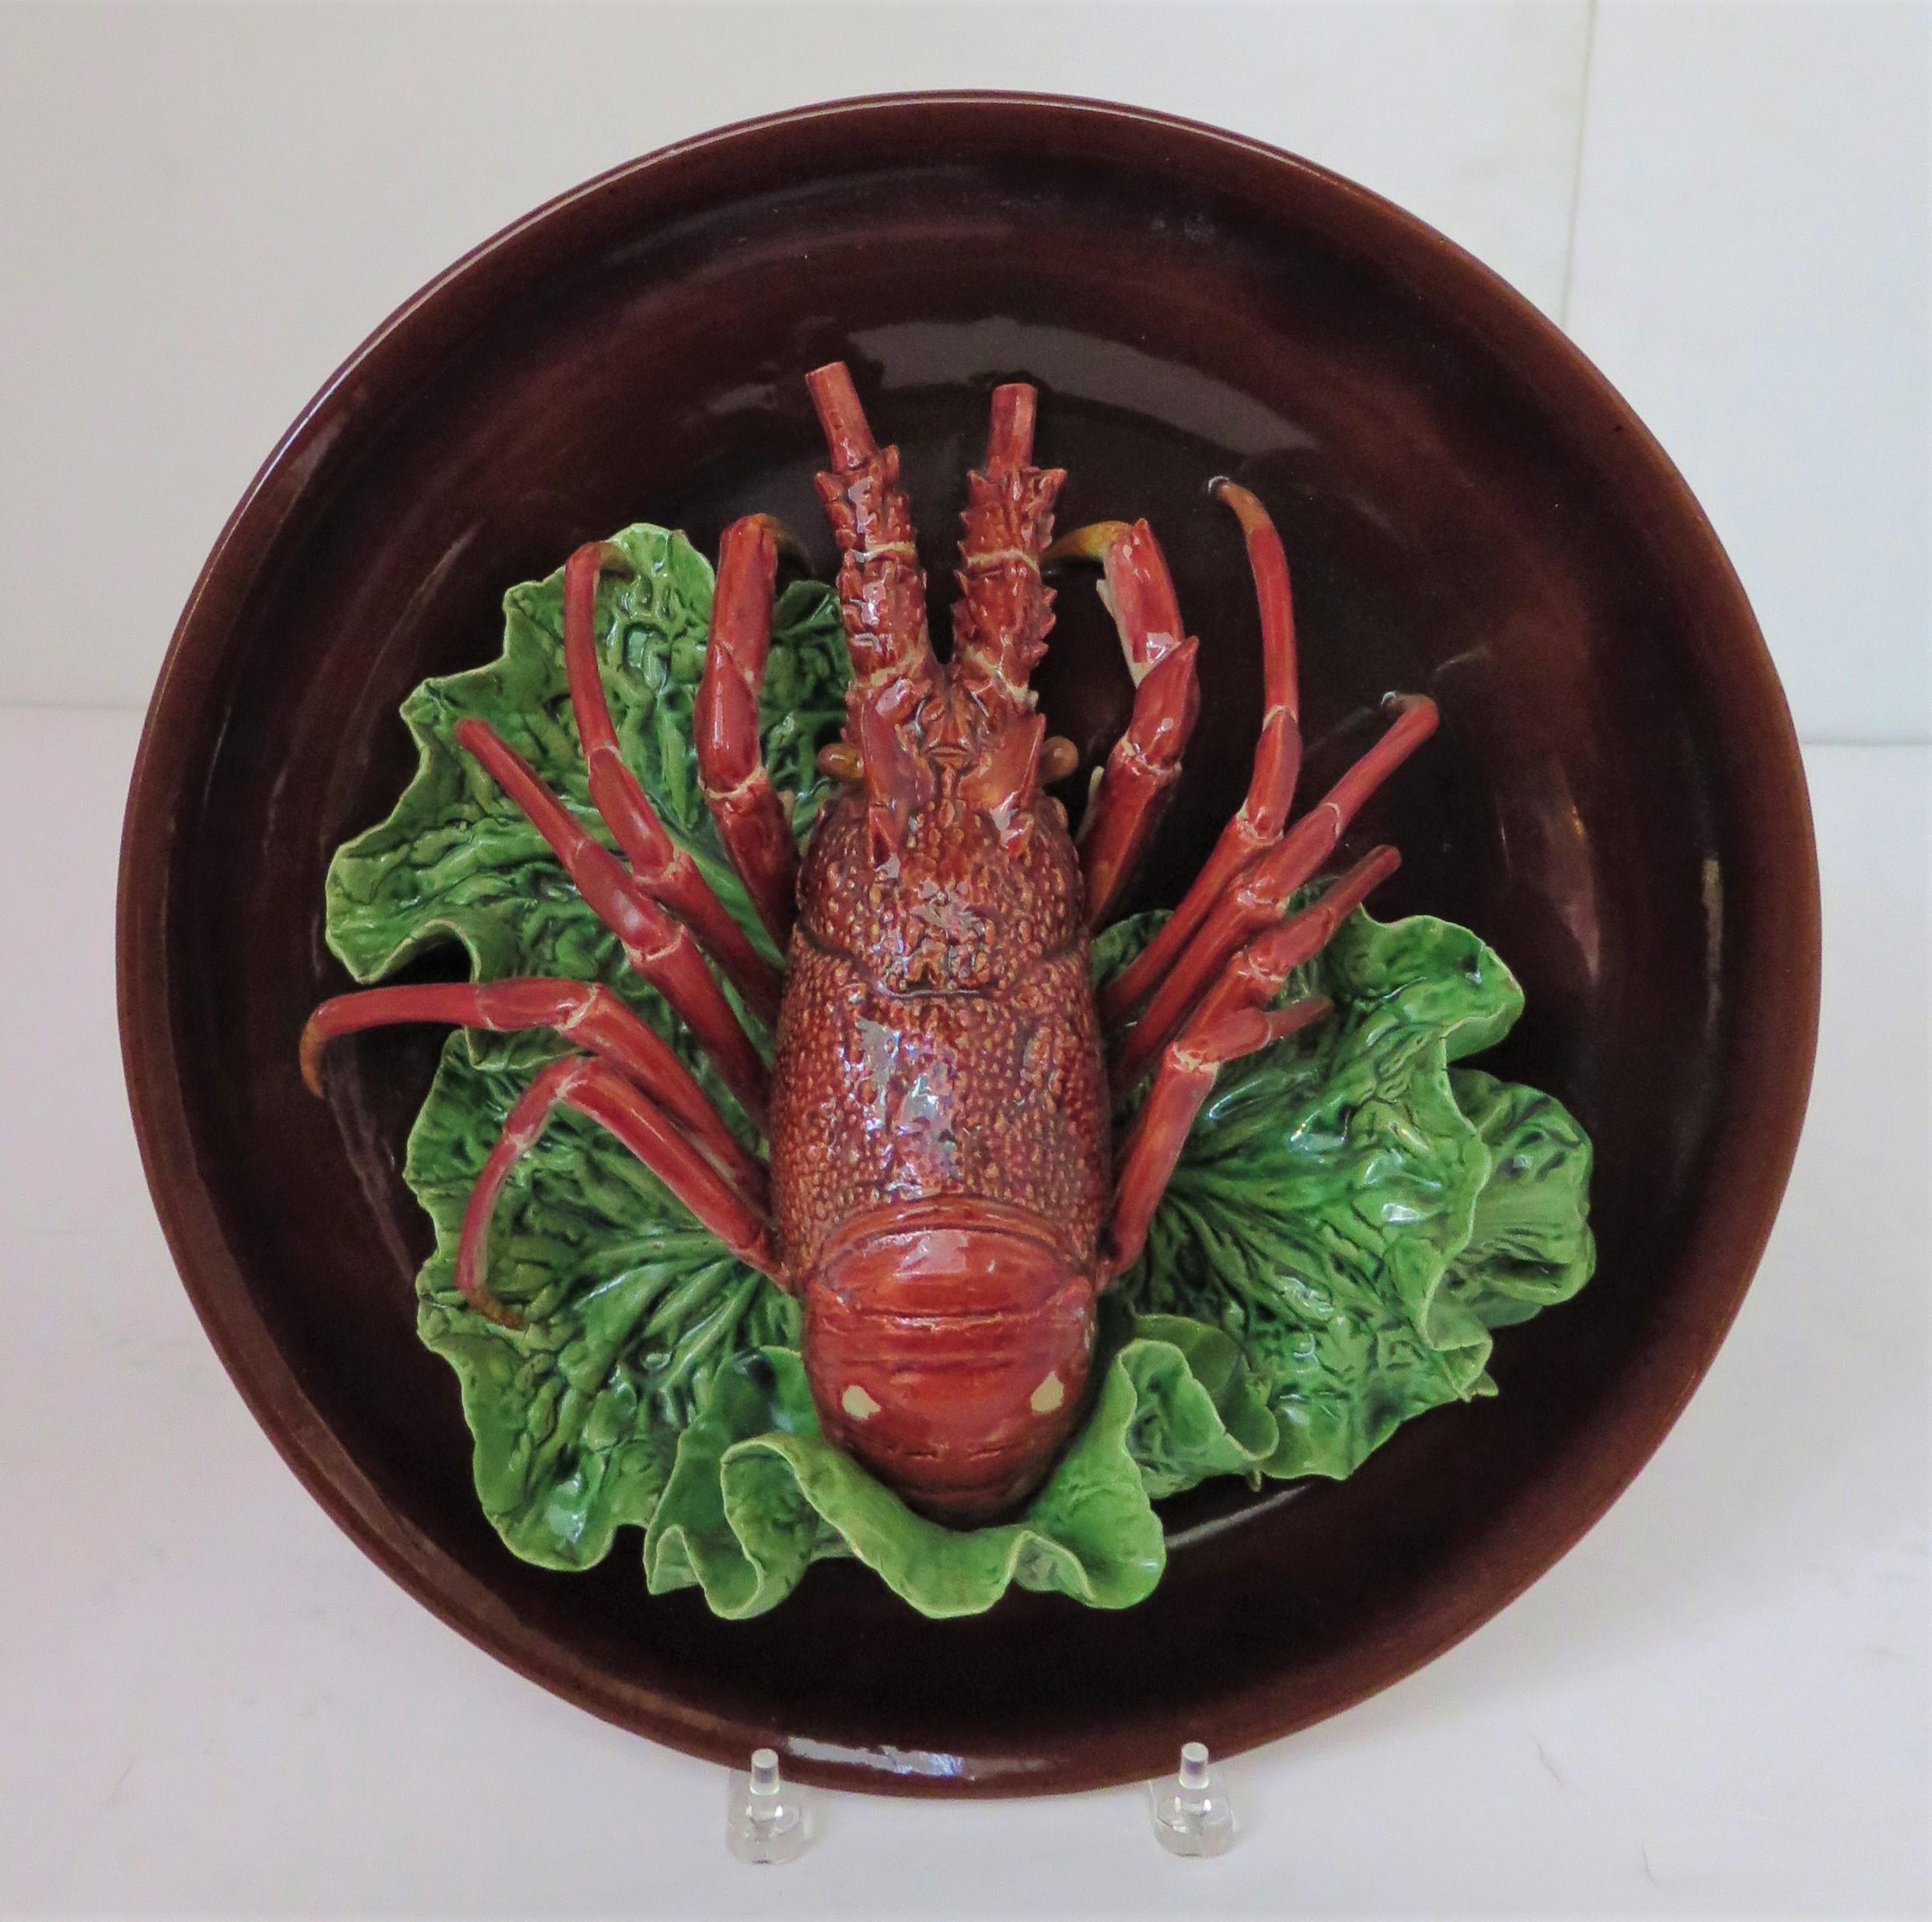 Large-Scale Majolica Lobster by Rafael Bordalo Pinheiro (Portugal, 1846-1905) For Sale 2